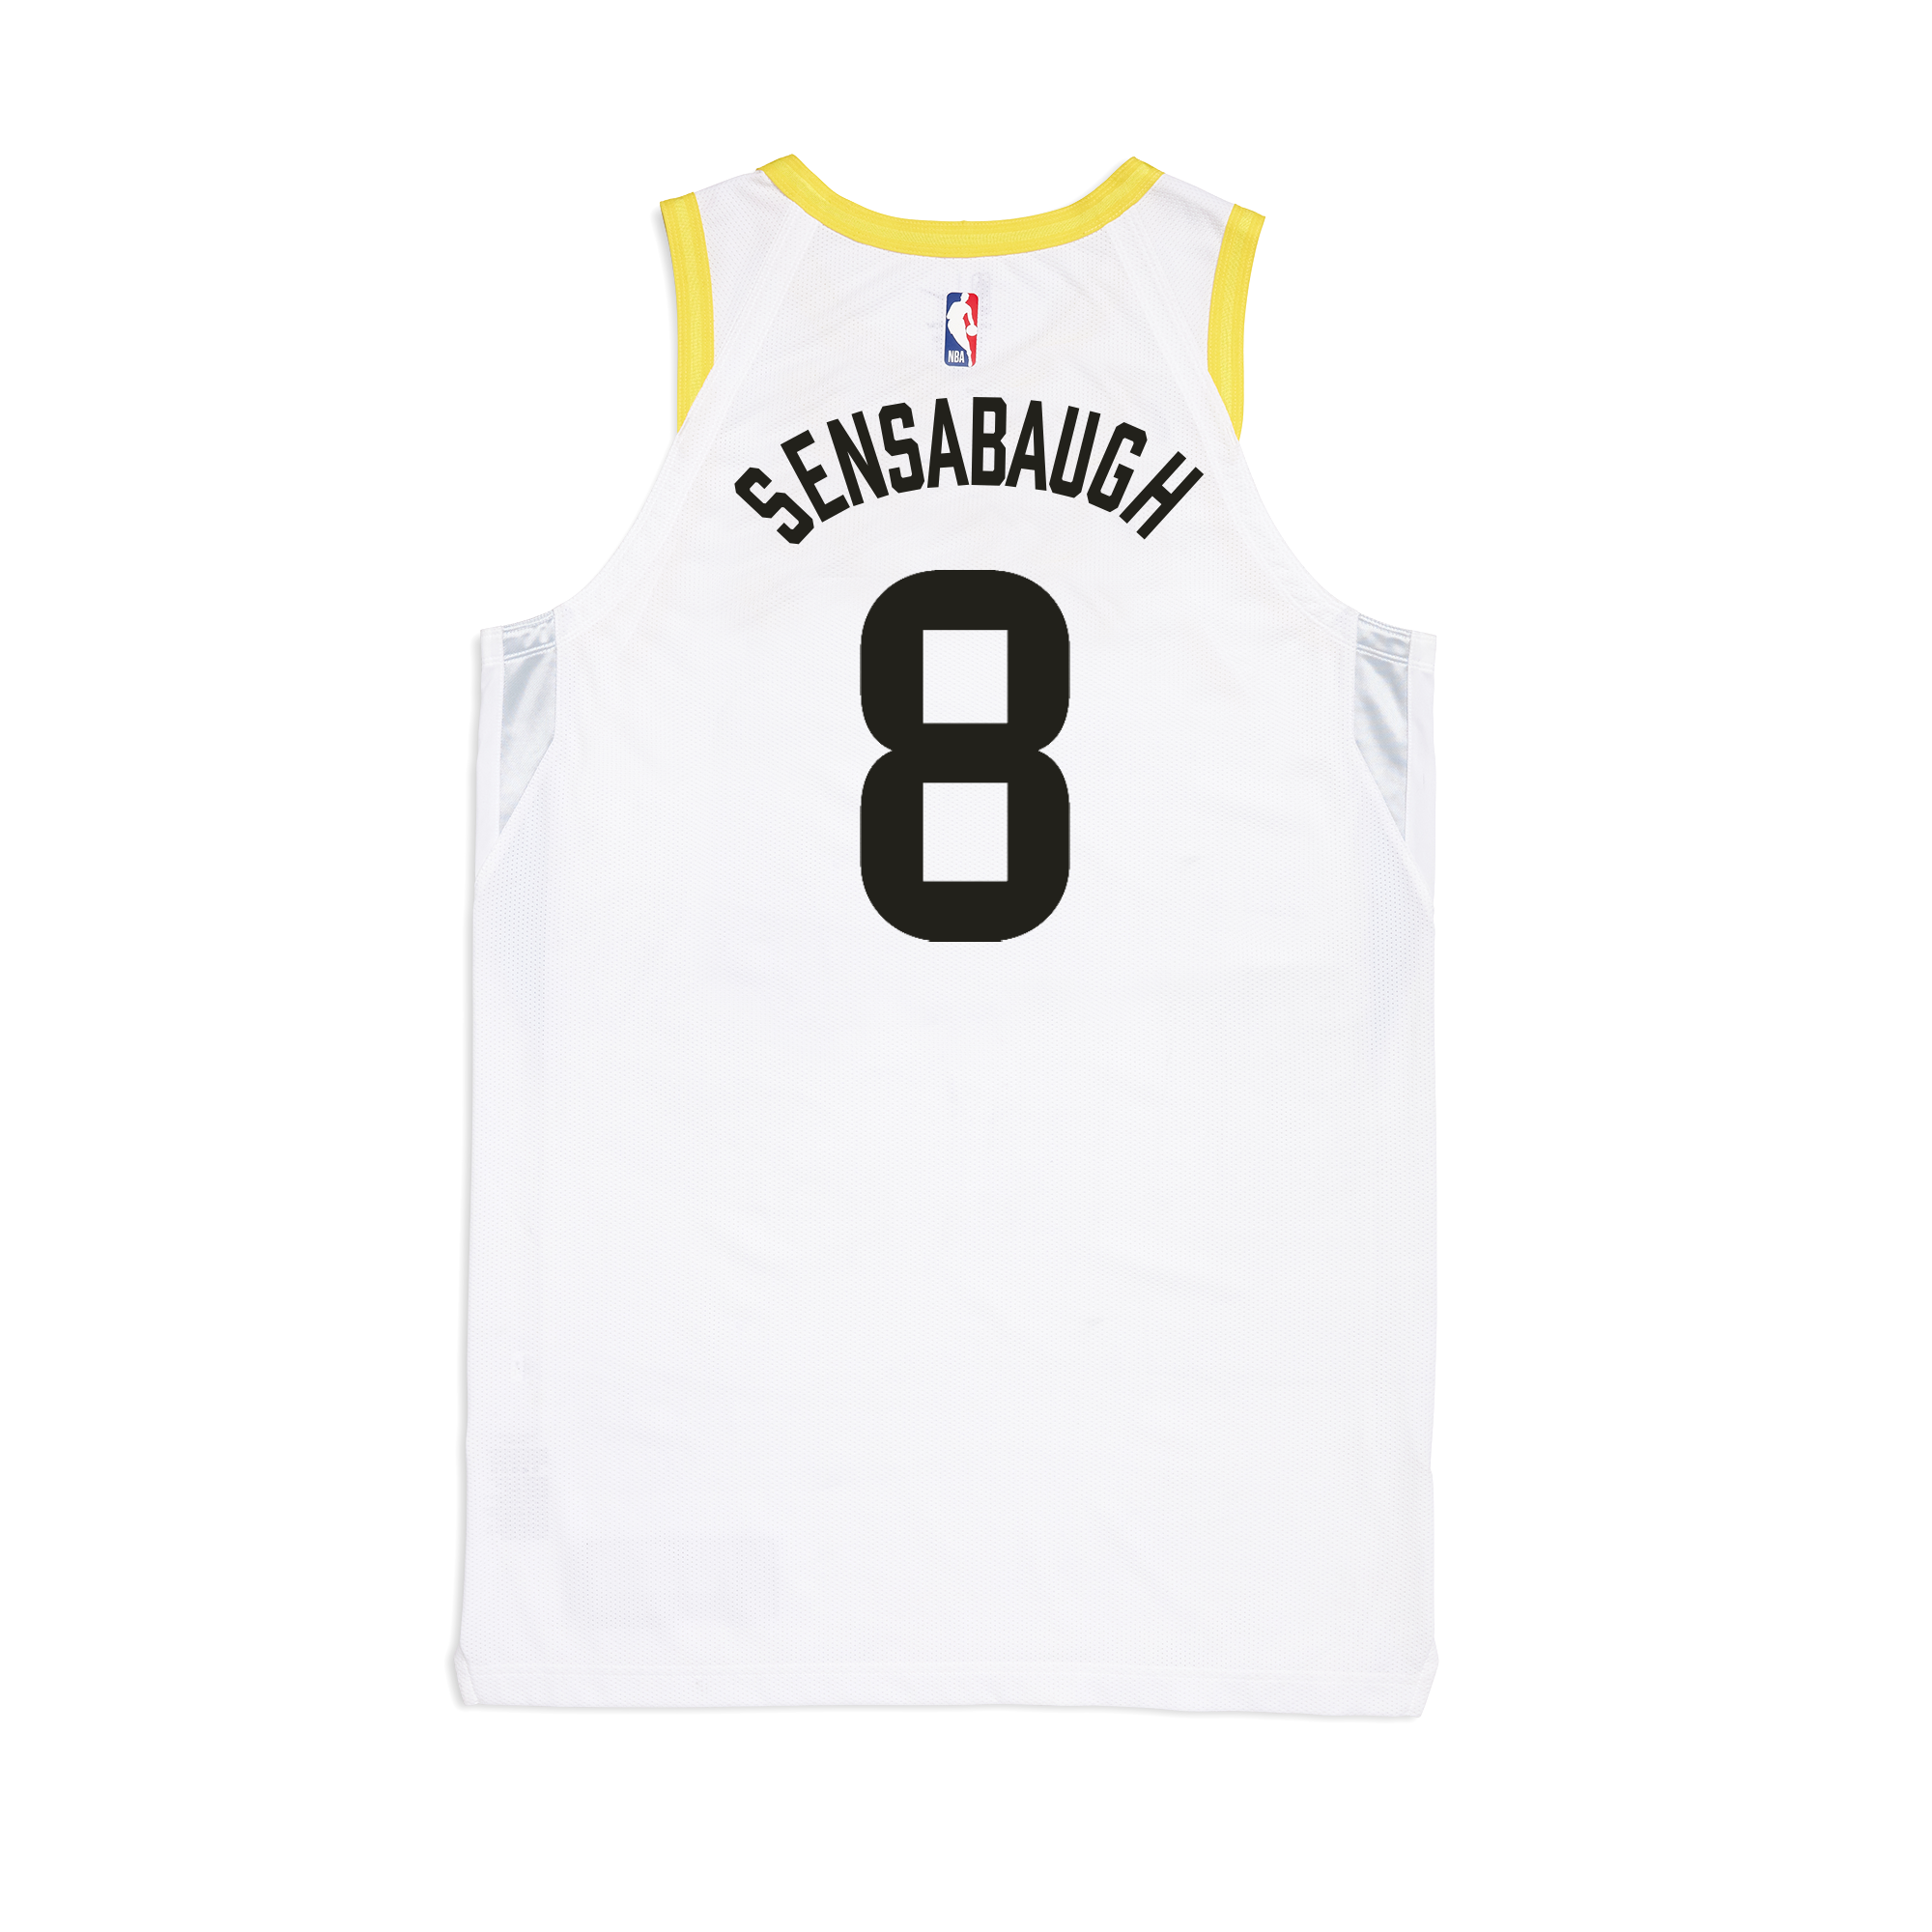 Jordan Clarkson - Utah Jazz Basketball Jersey Essential T-Shirt